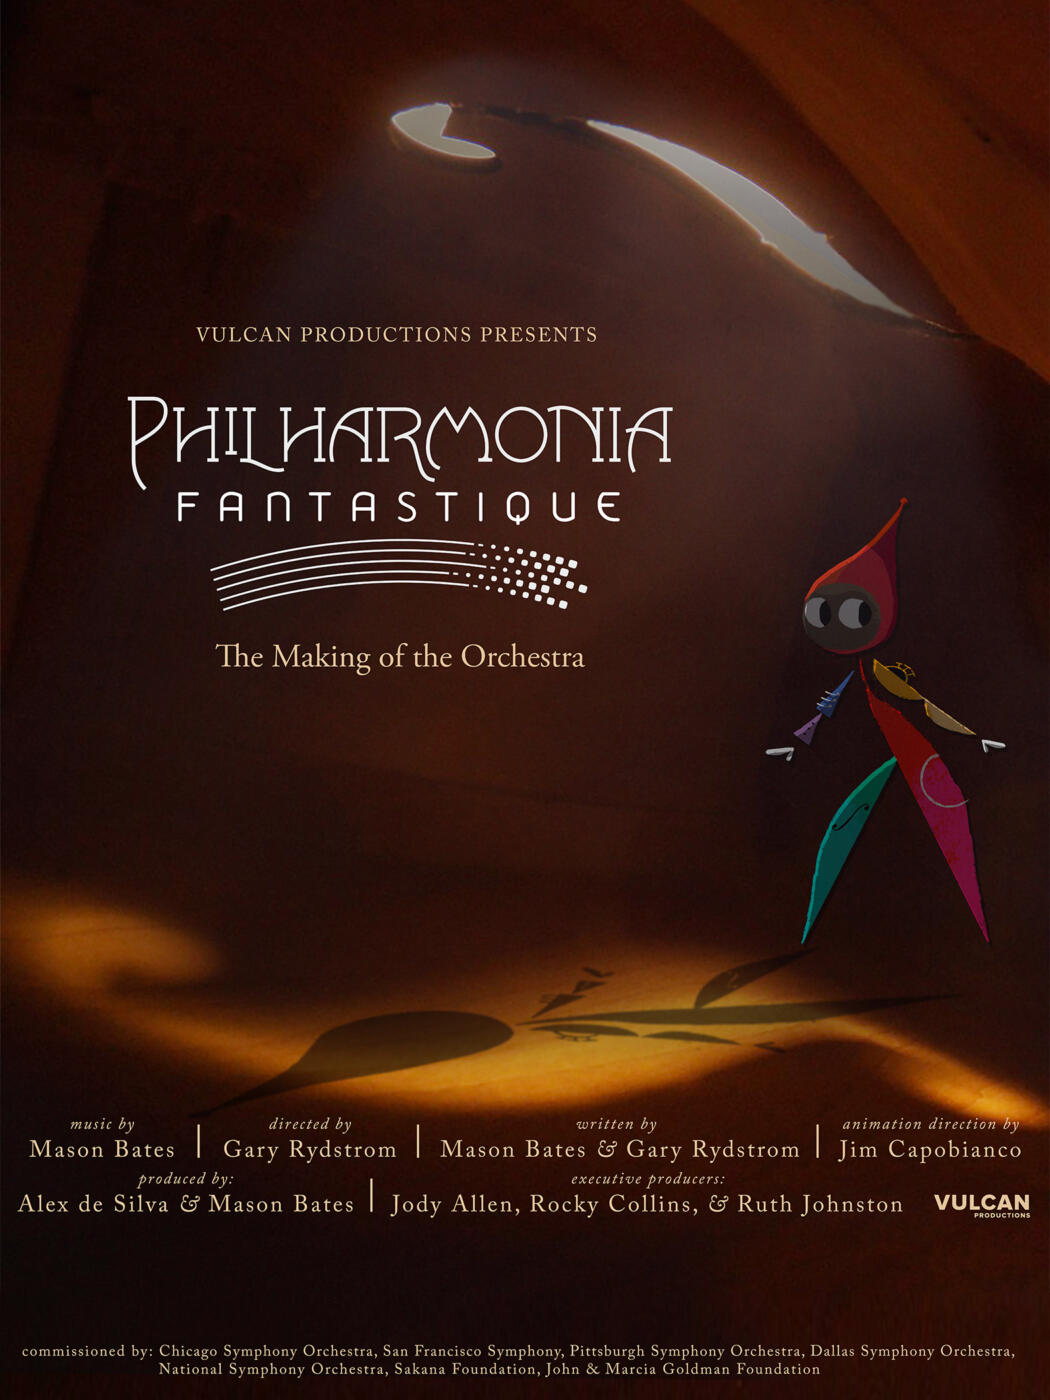 Philharmonia Fantastique Official Poster